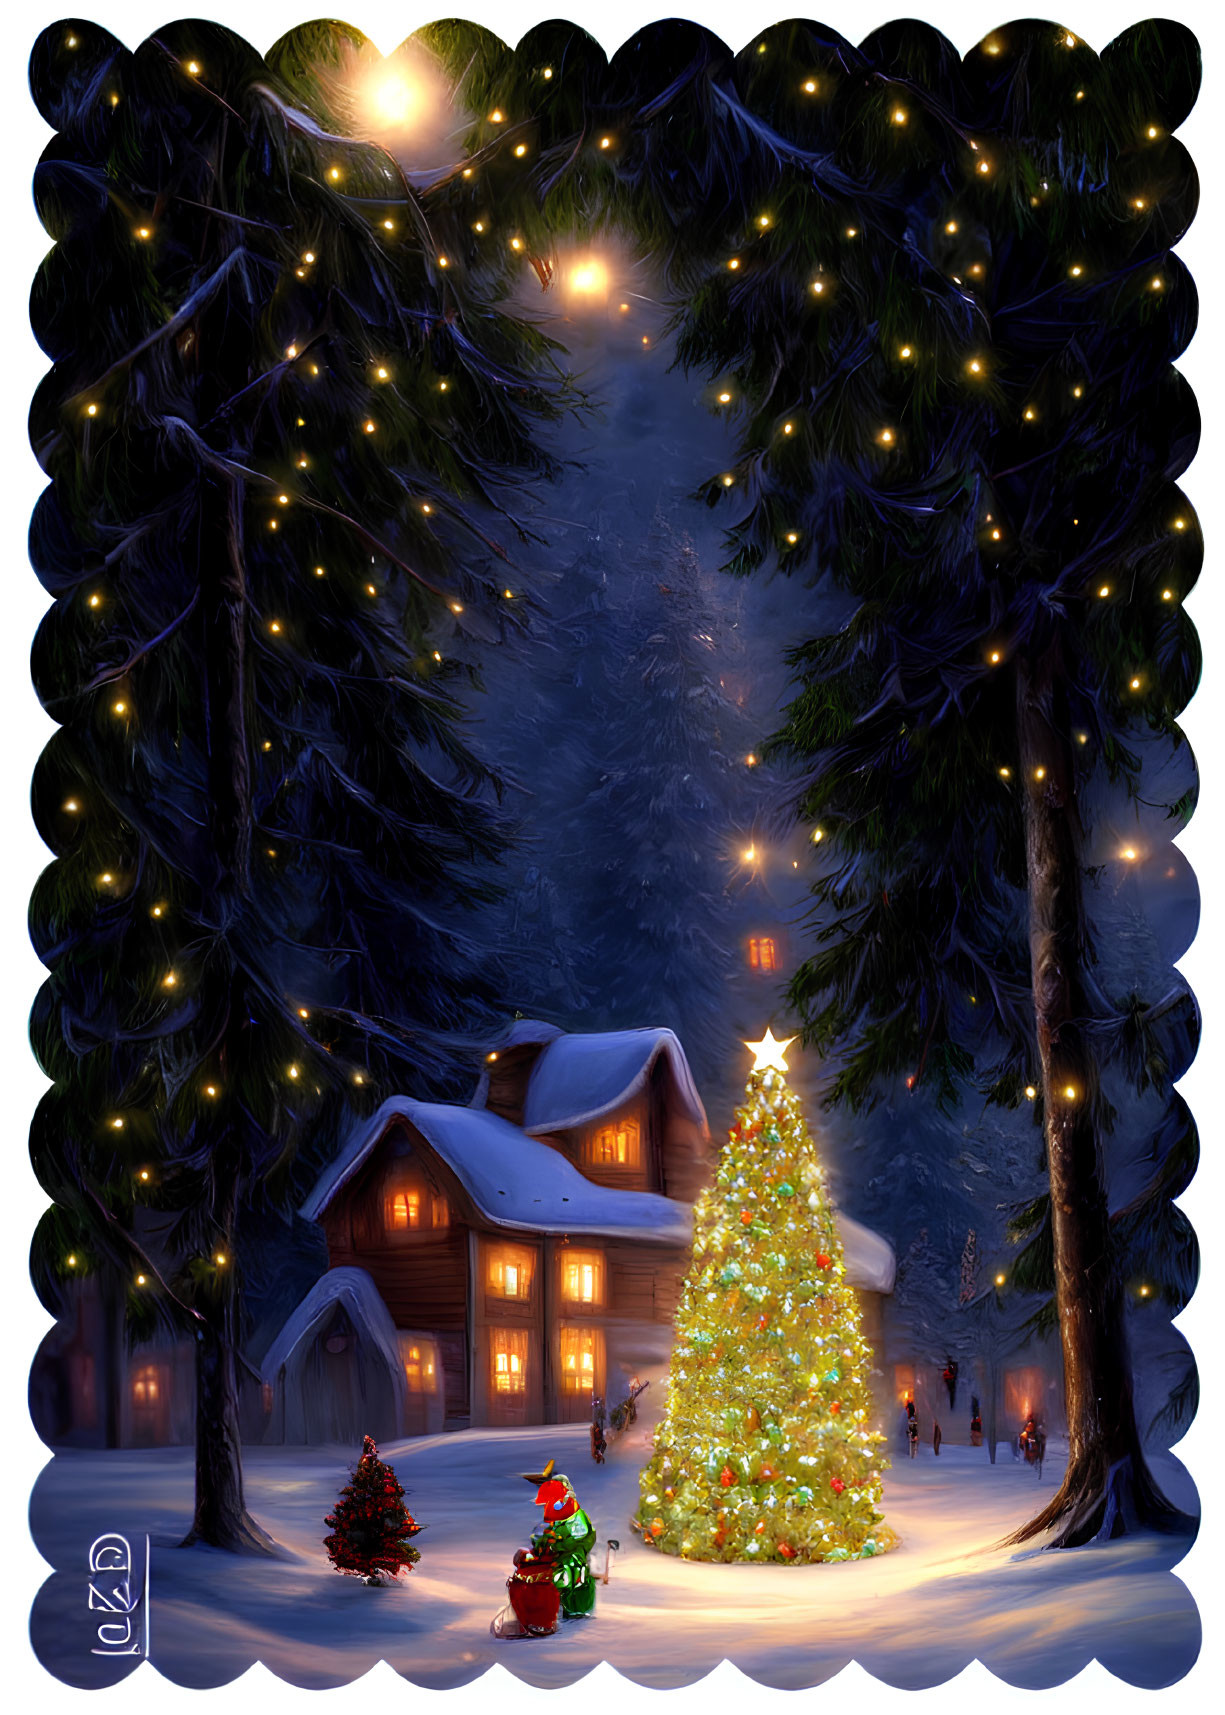 Snowy Christmas night with lit tree & starry sky